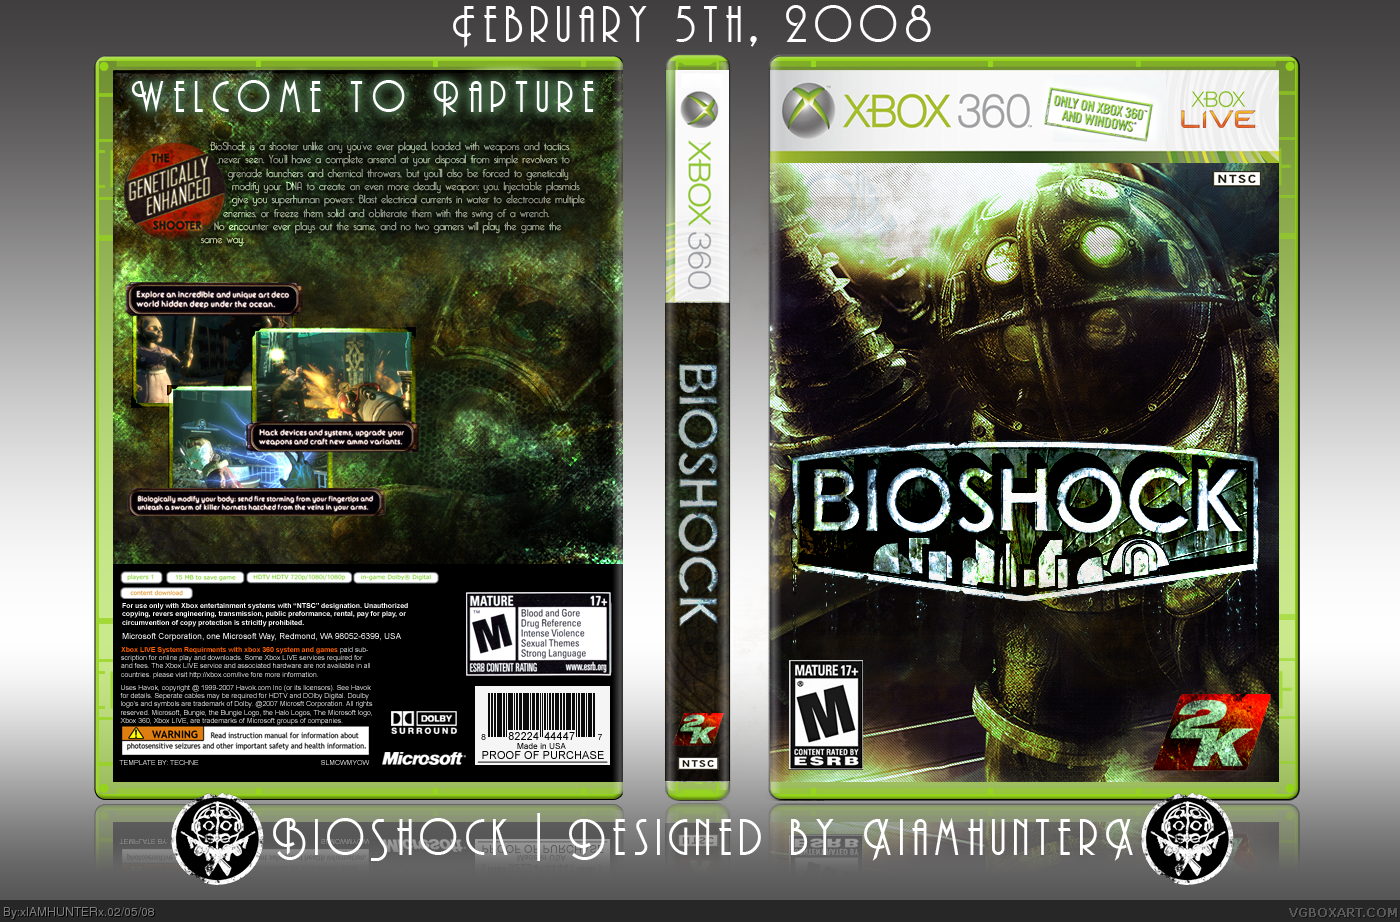 Bioshock Xbox 360 обложка. Биошок 2 обложка иксбокс360. Bioshock 2 Xbox 360 обложка. Хвох 360 диск Bioshock 2. Формат игр xbox 360